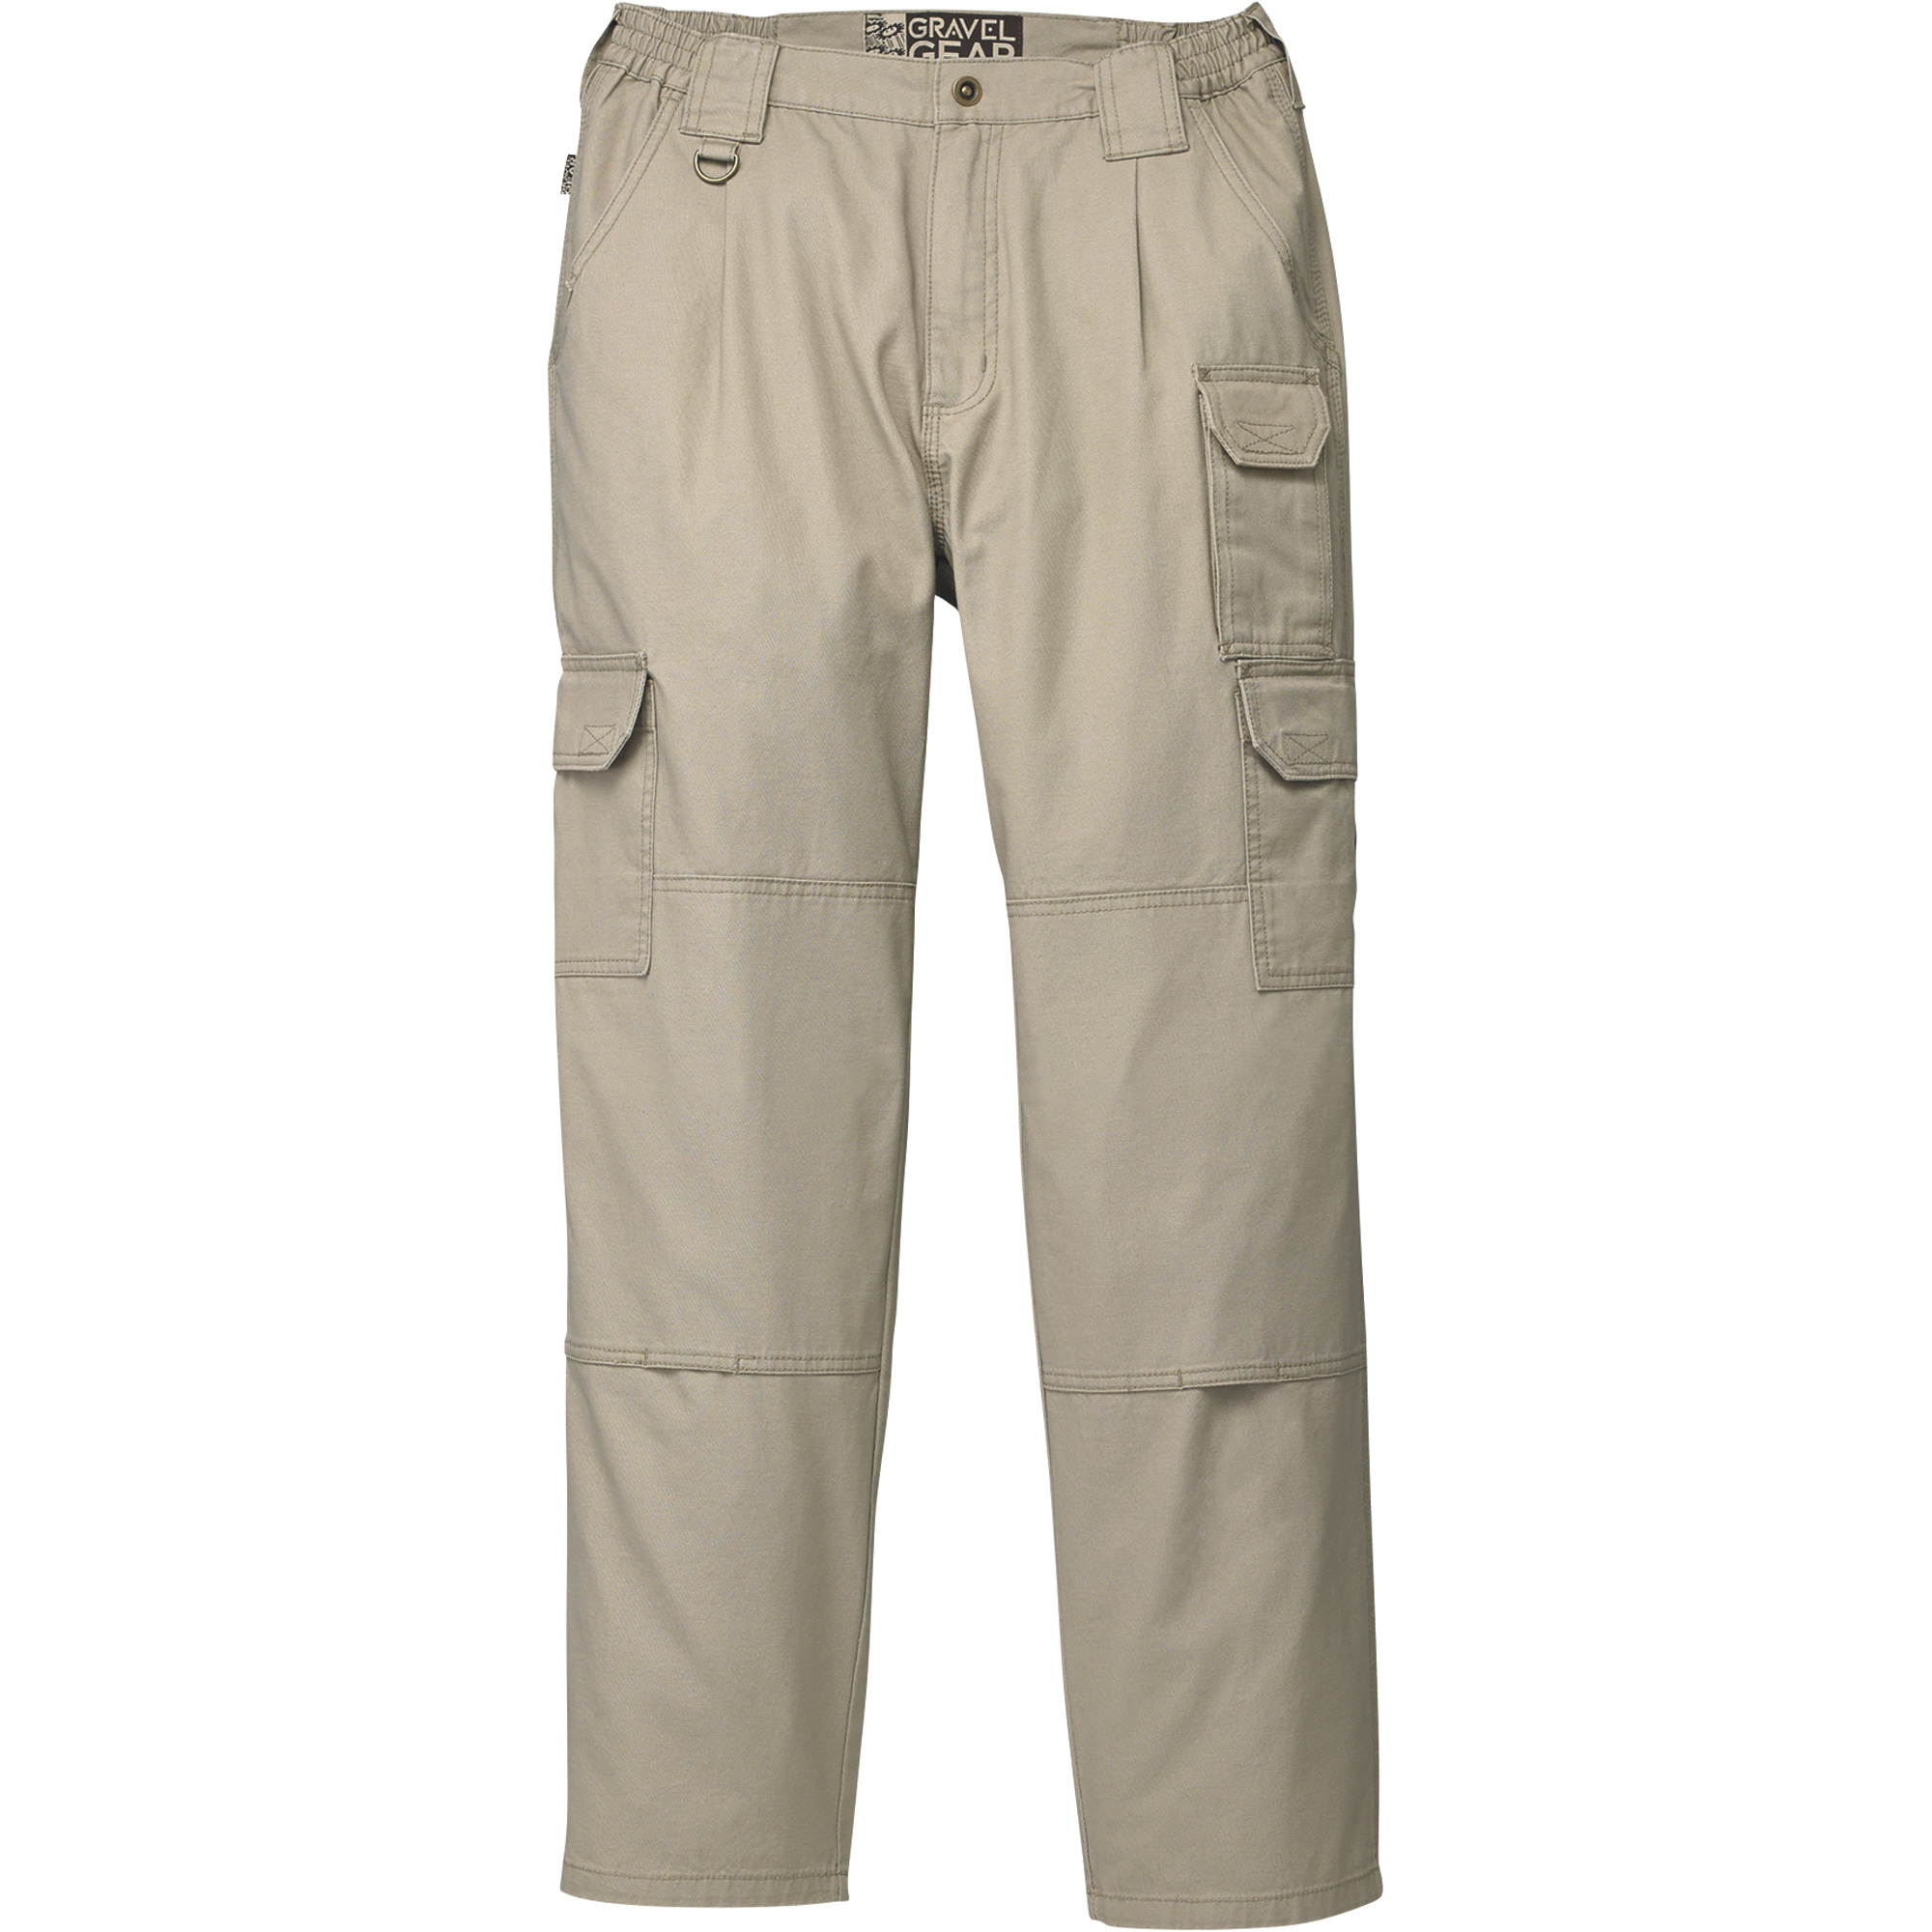 Gravel Gear Men's 7-Pocket Tactical Pants with Teflon - Khaki, 34Inch Waist x 32Inch Inseam